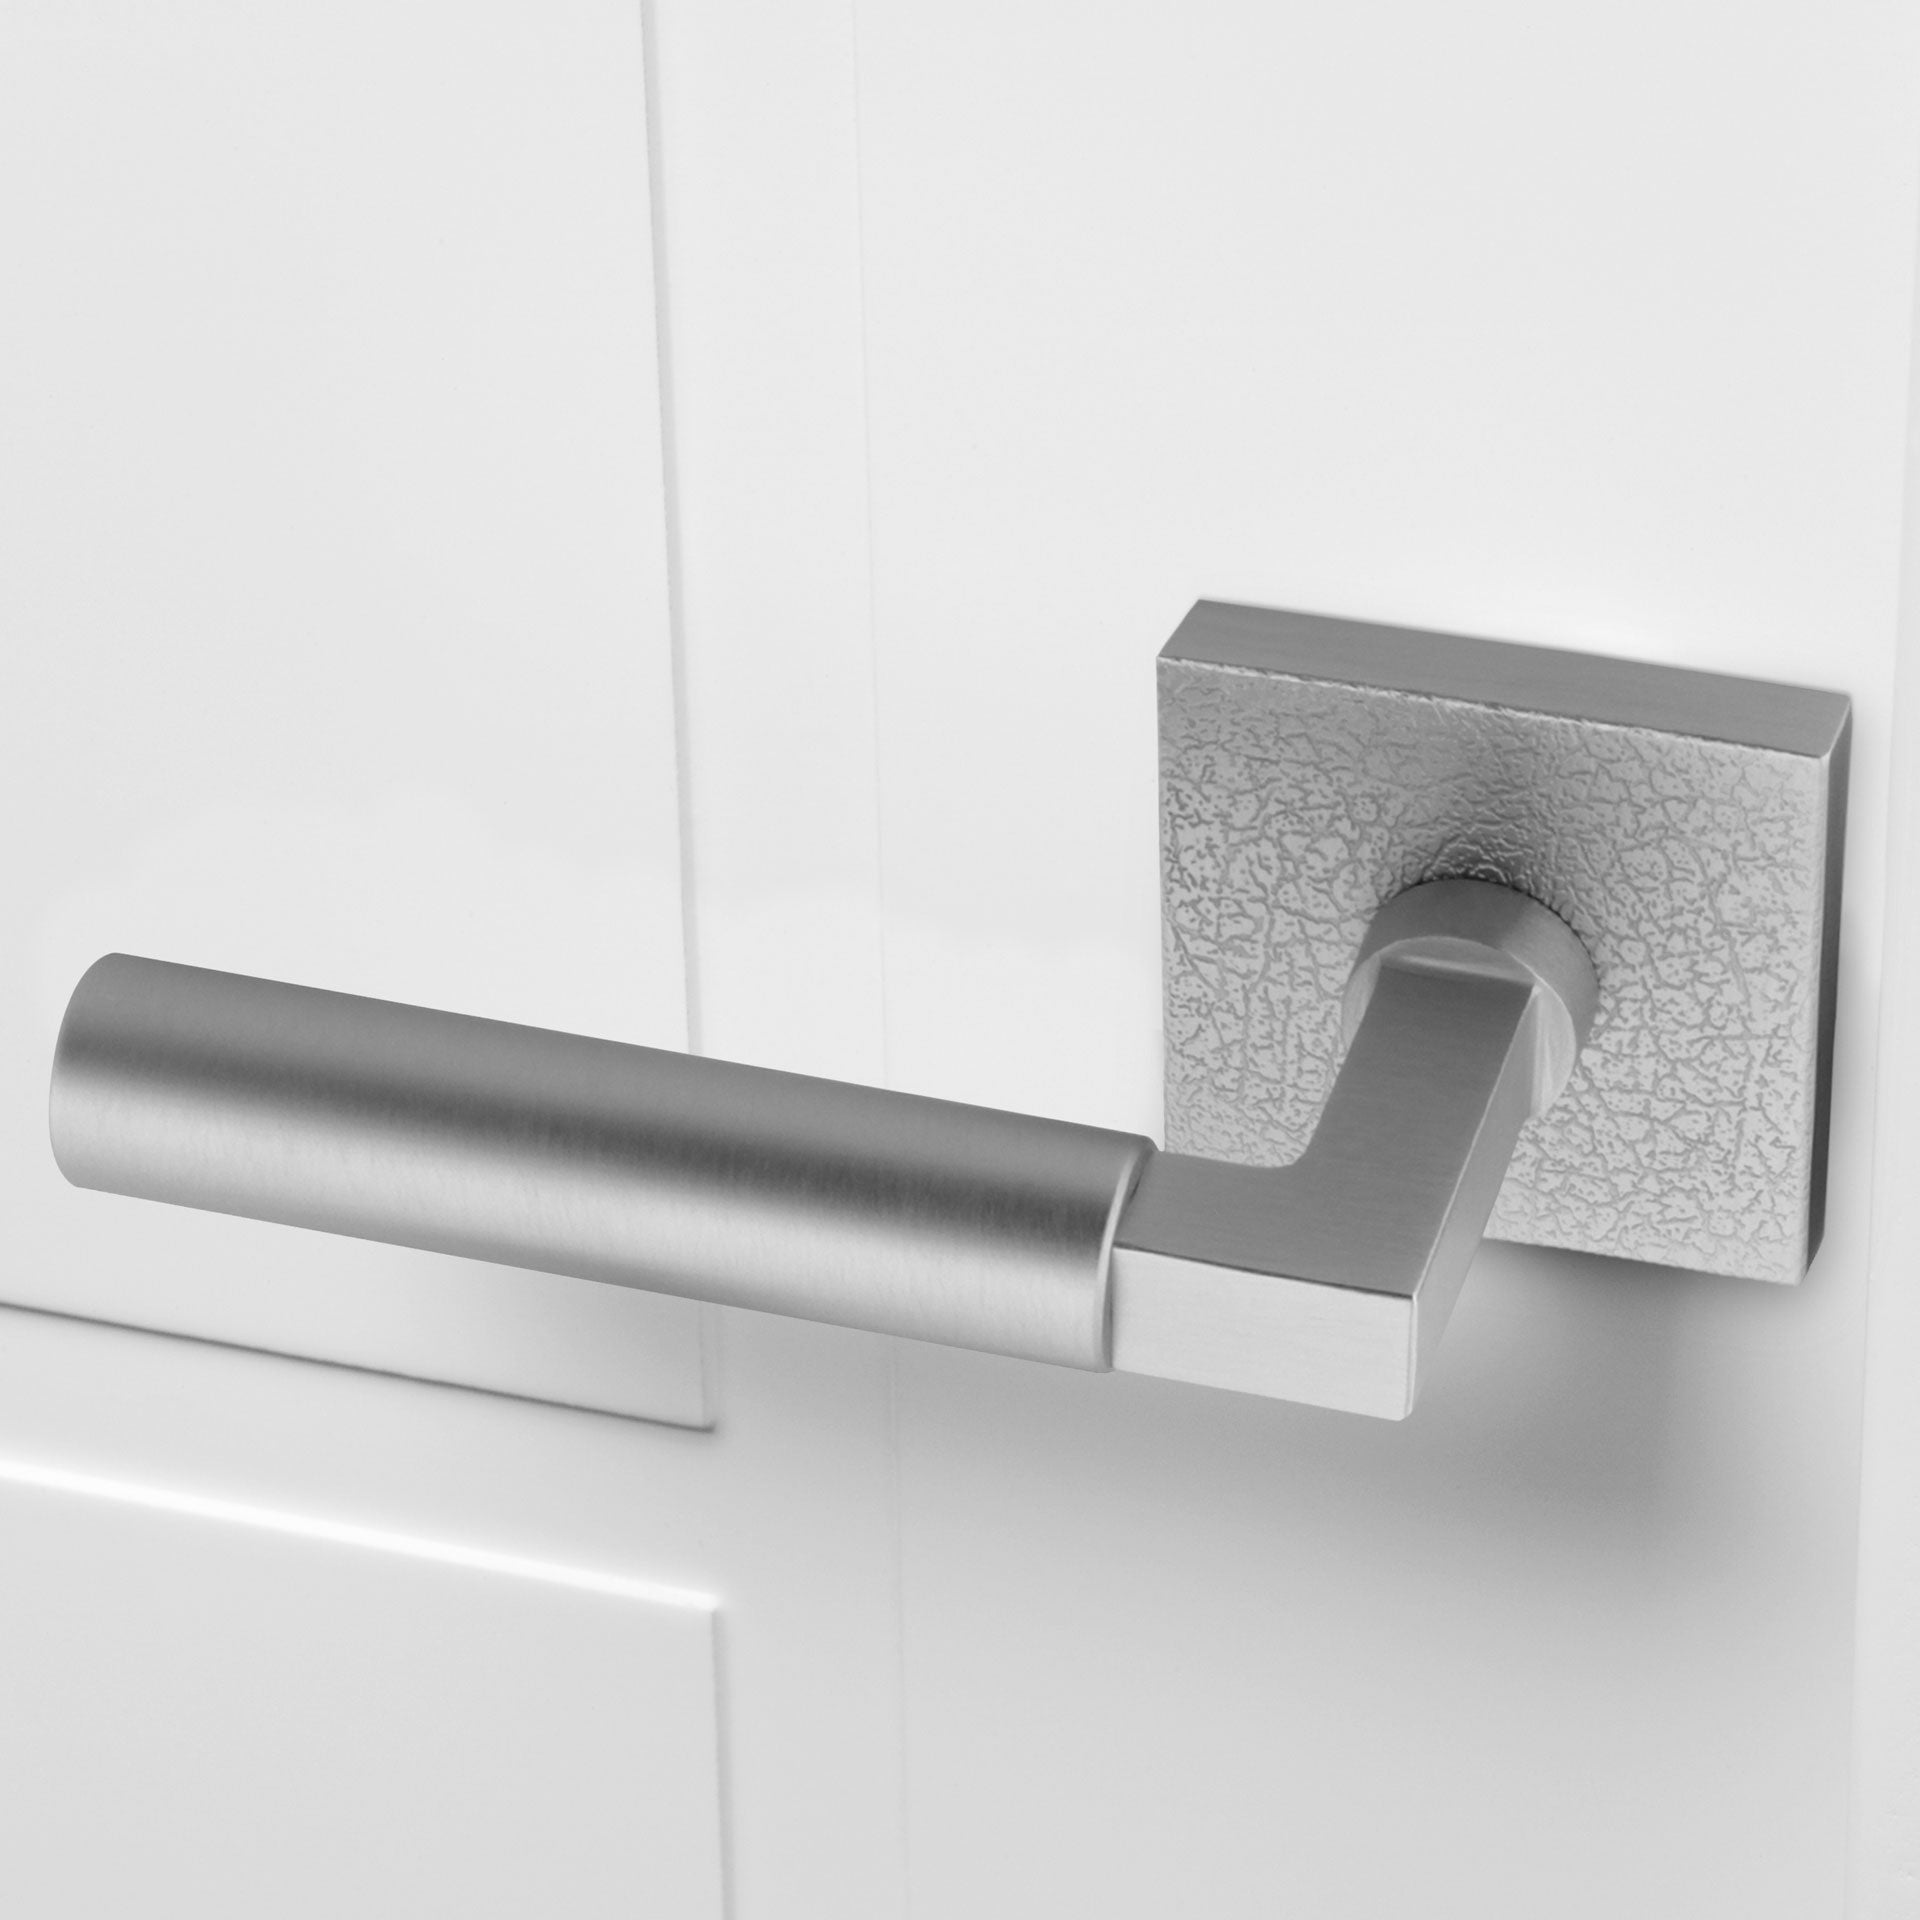 White door with Quadrato Leather Rosette with Contempo Lever in Satin Nickel.